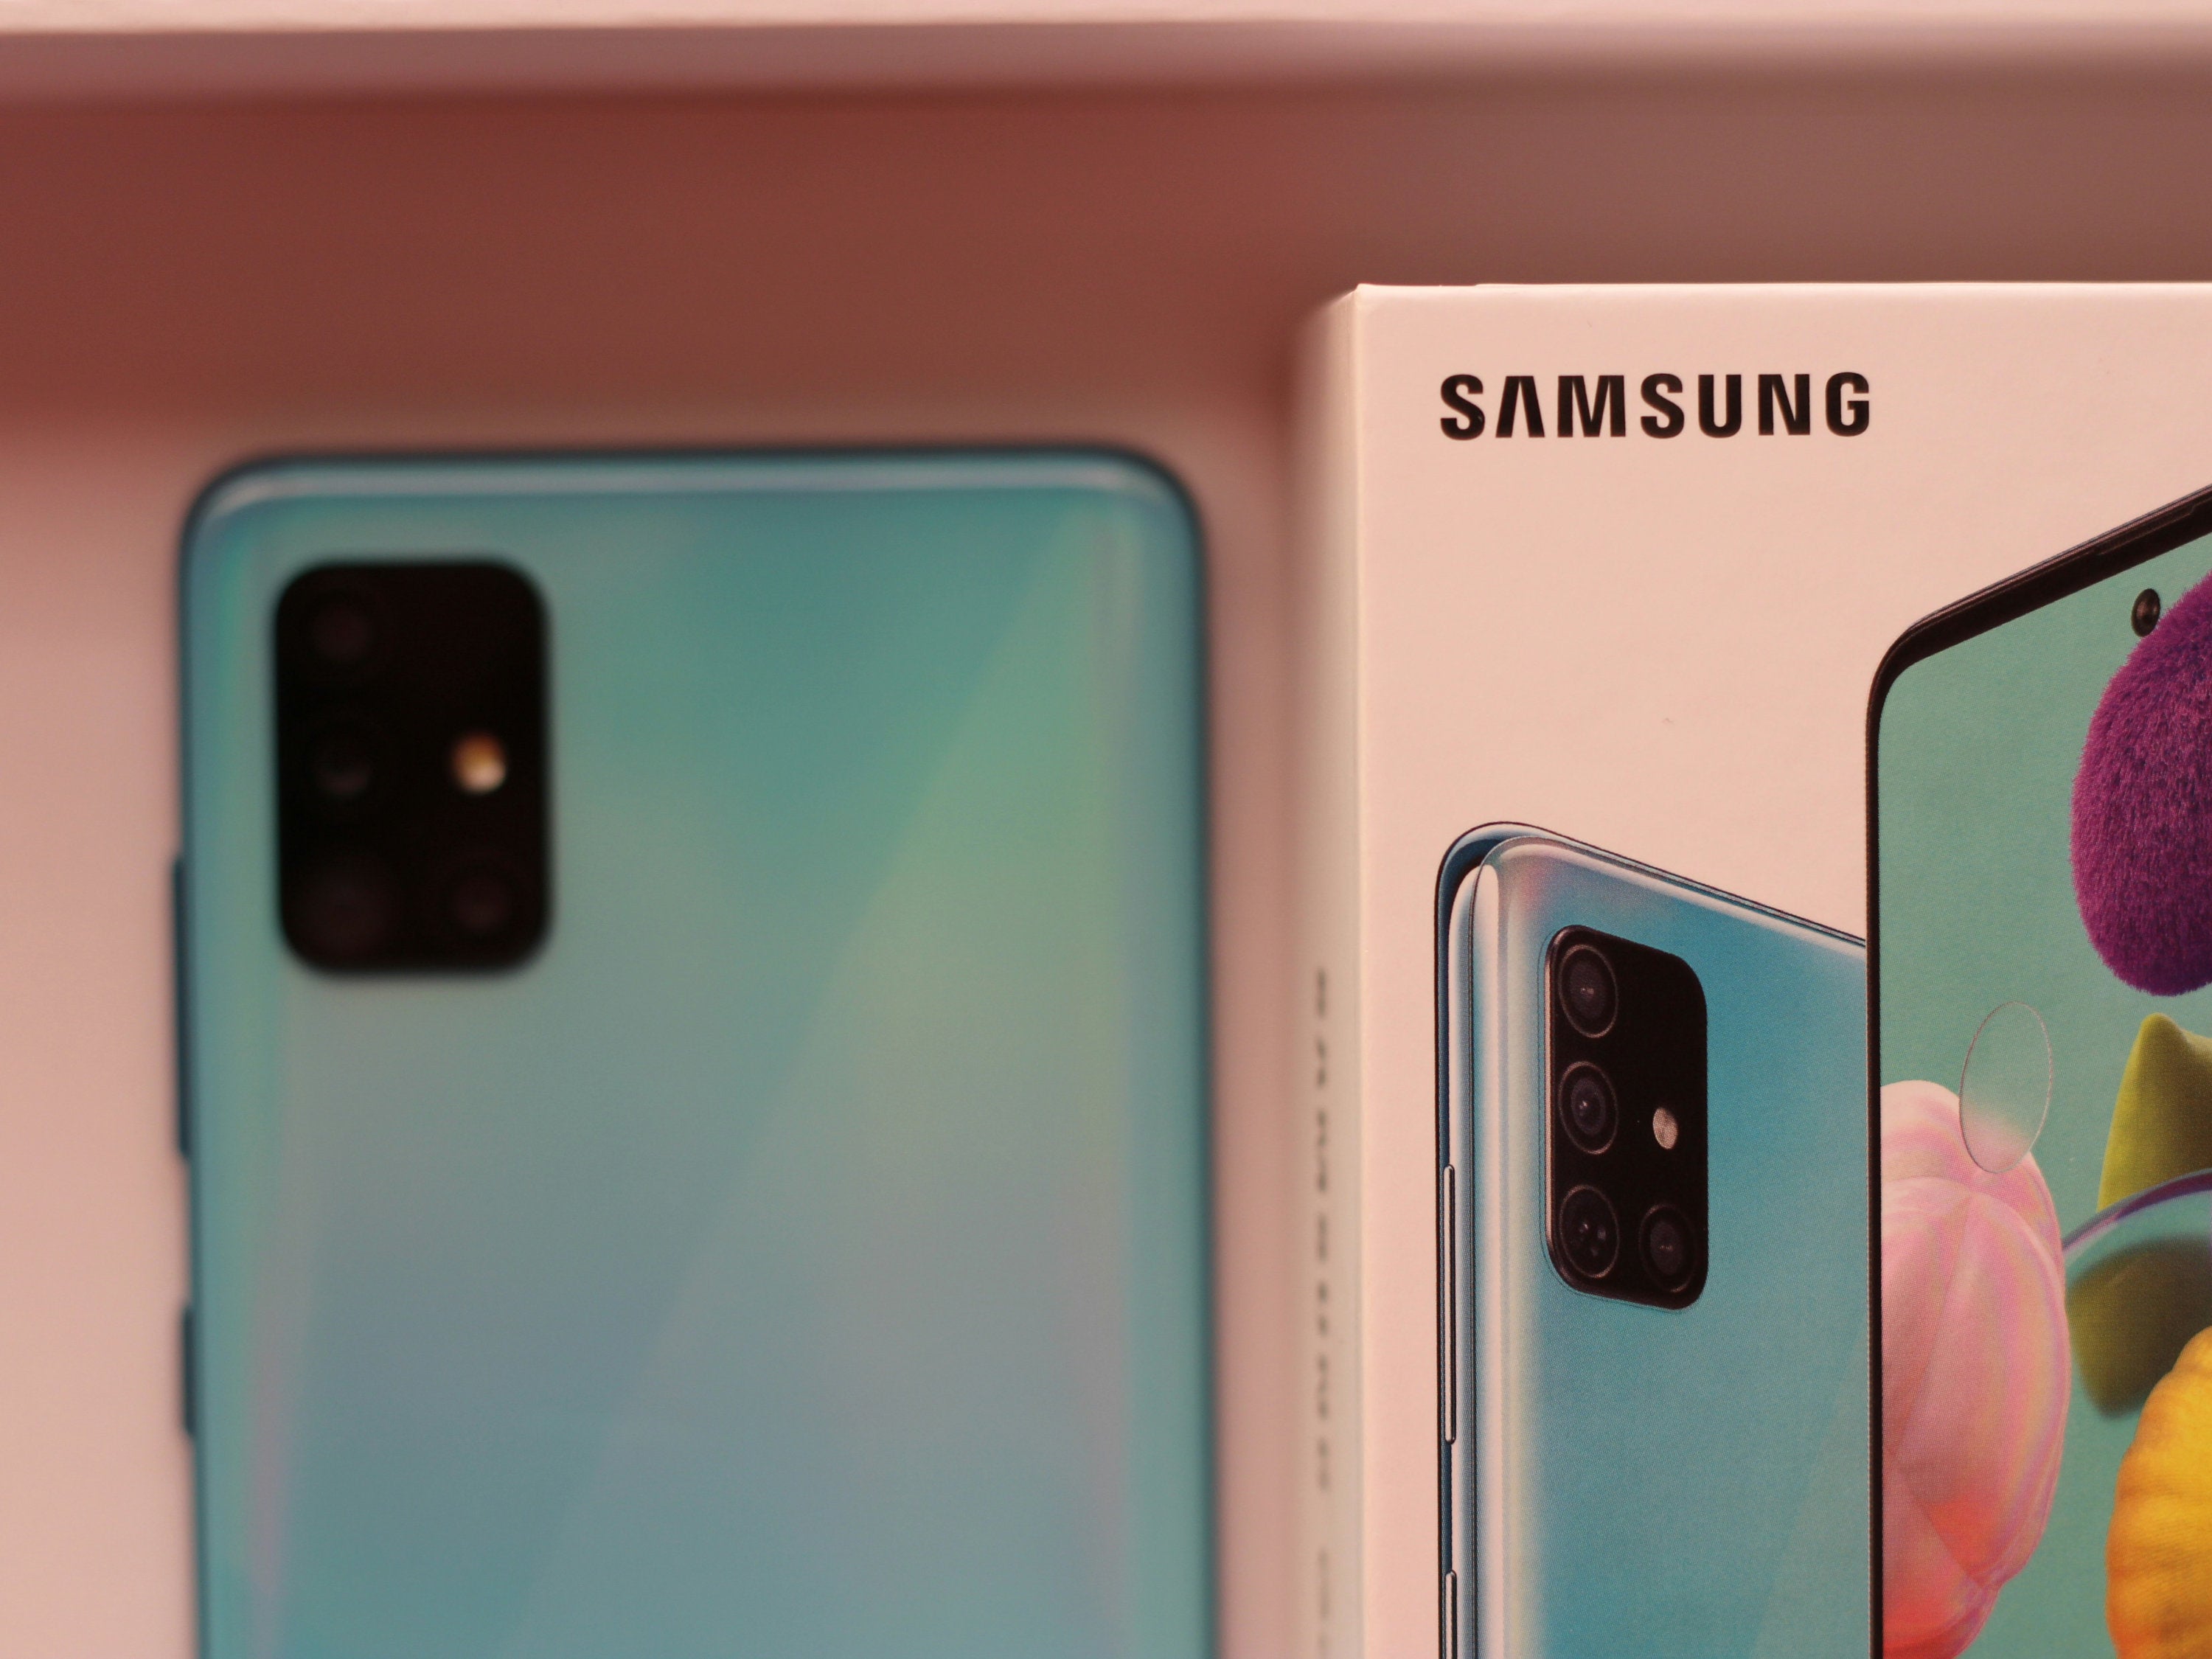 Samsung Galaxy A51 is no longer receiving updates